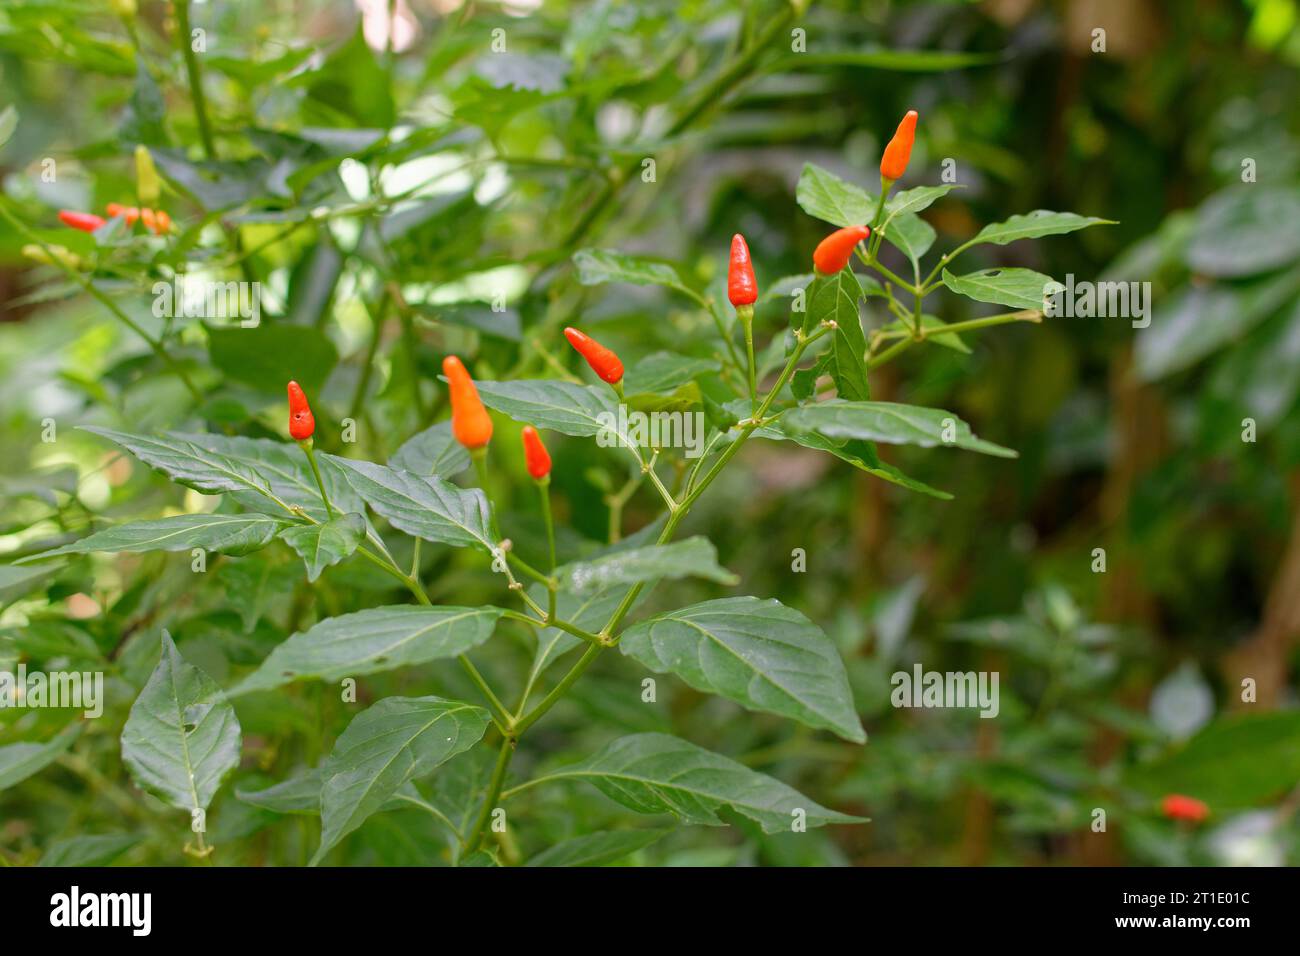 French Polynesia: chili pepper (capsicum frutescens) Stock Photo